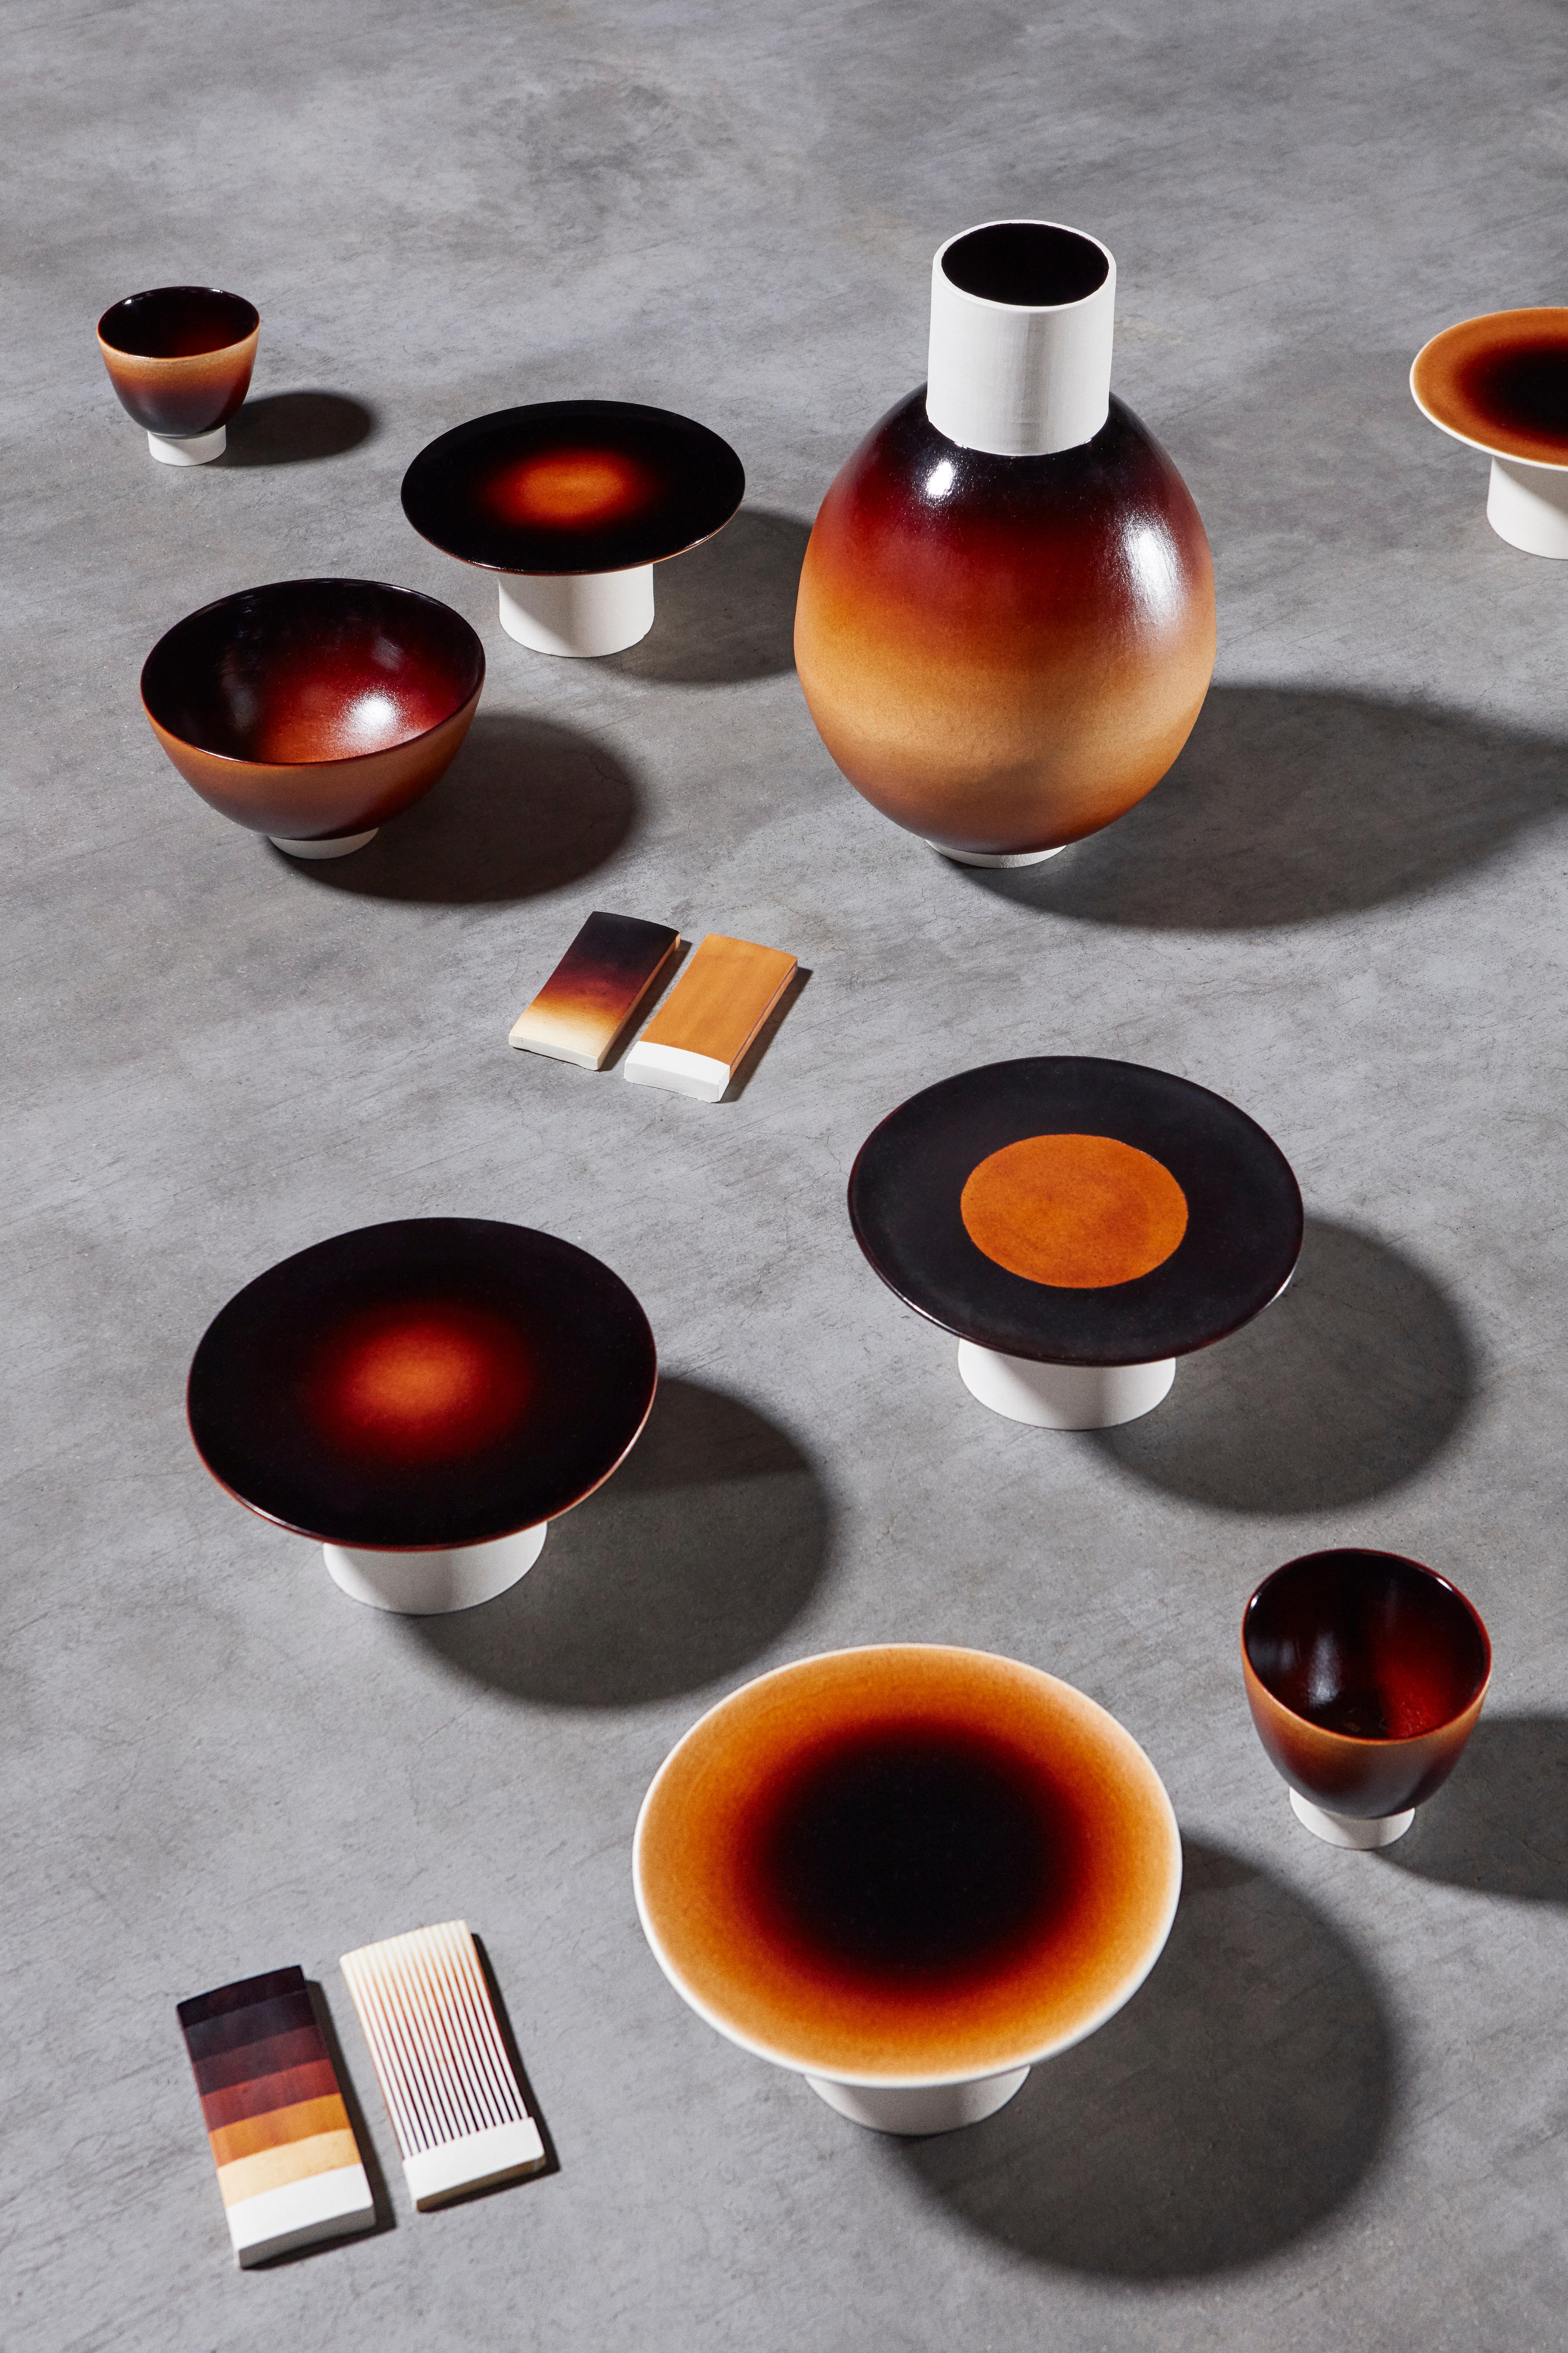 Ott Another Paradigmatic Handmade Ceramic Cup by Studio Yoon Seok-Hyeon 4